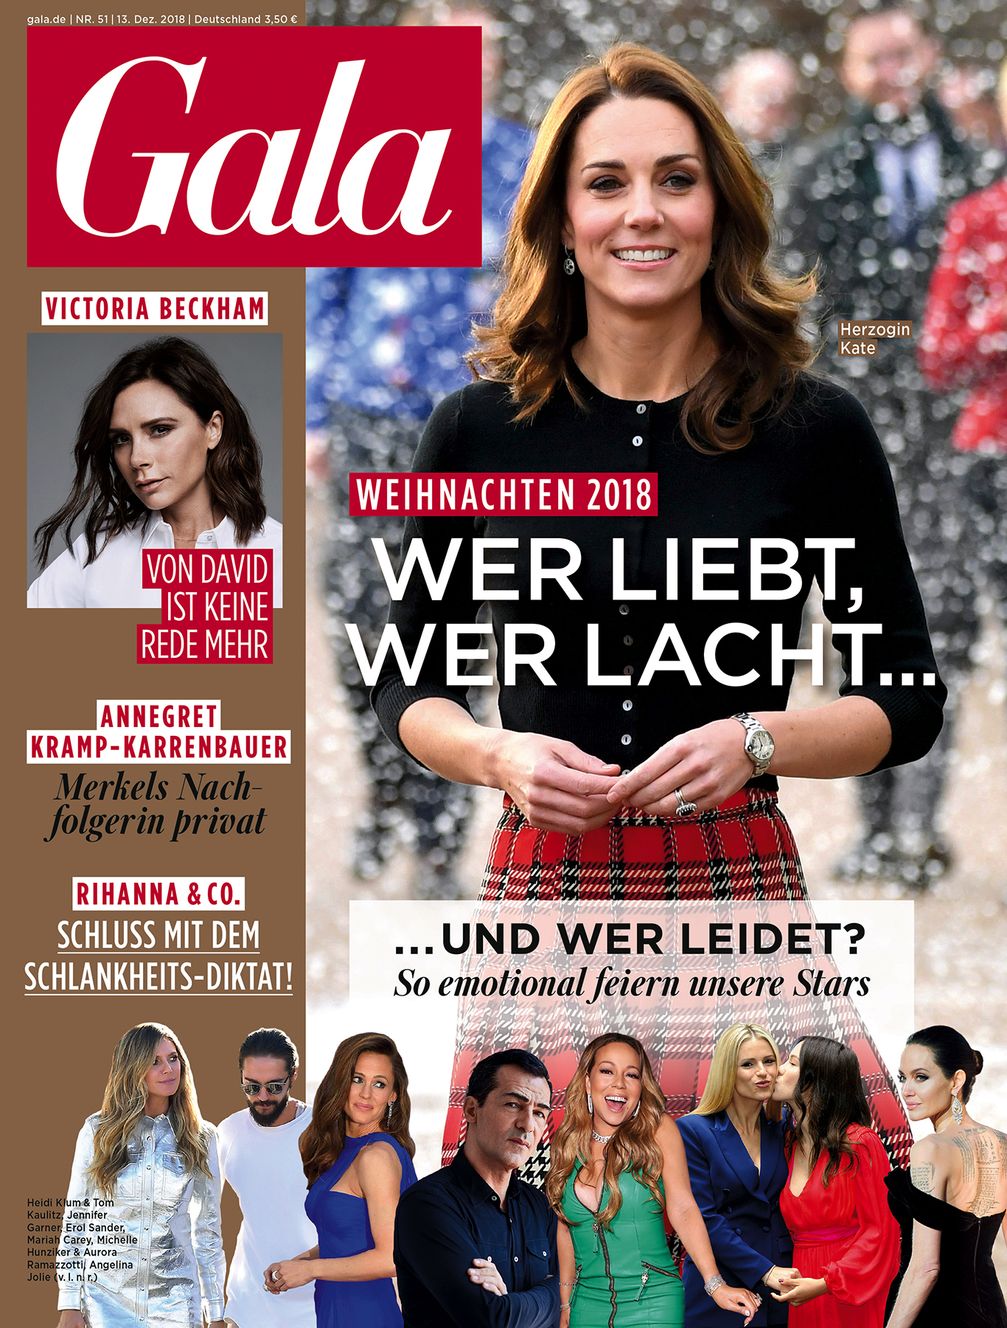 GALA Cover 51/2018, EVT 13.12.2018 / Bild: "obs/Gruner+Jahr, Gala"